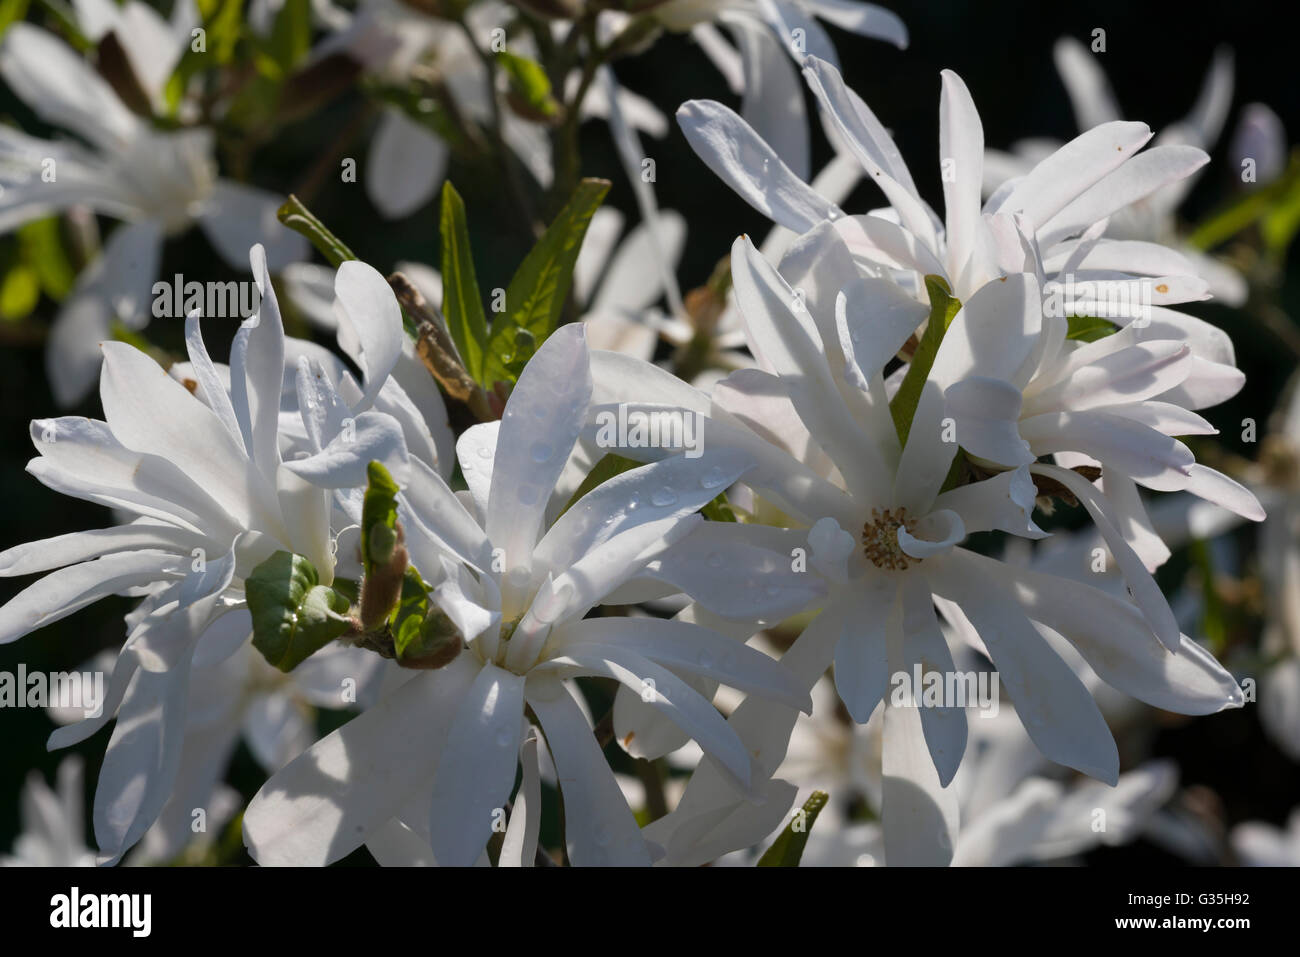 White star stella magnolia Stock Photo - Alamy